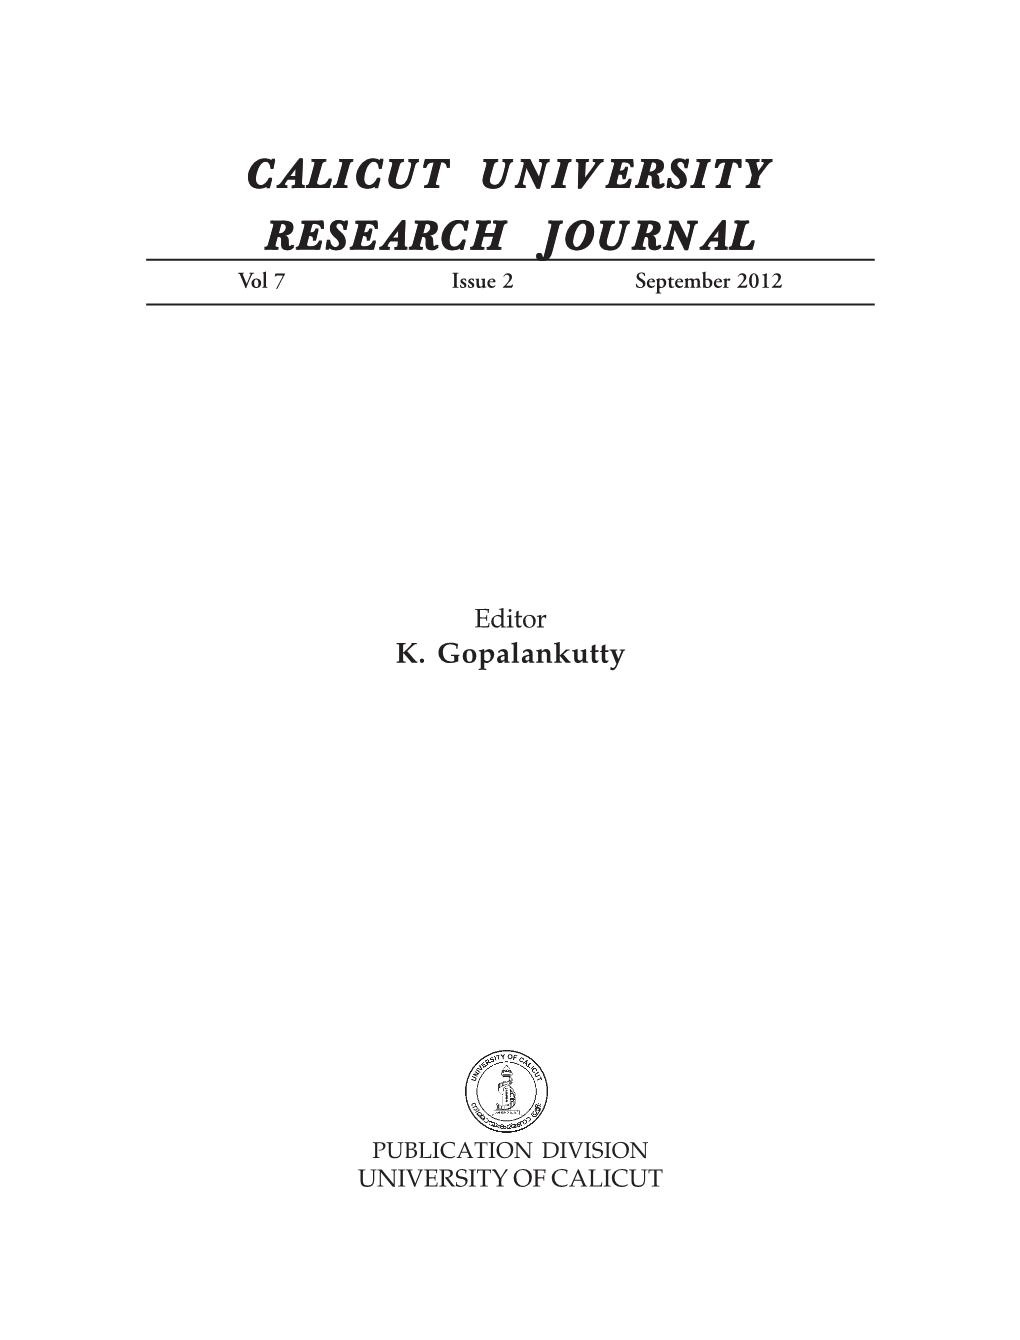 CALICUT UNIVERSITY RESEARCH JOURNAL Vol 7 Issue 2 September 2012